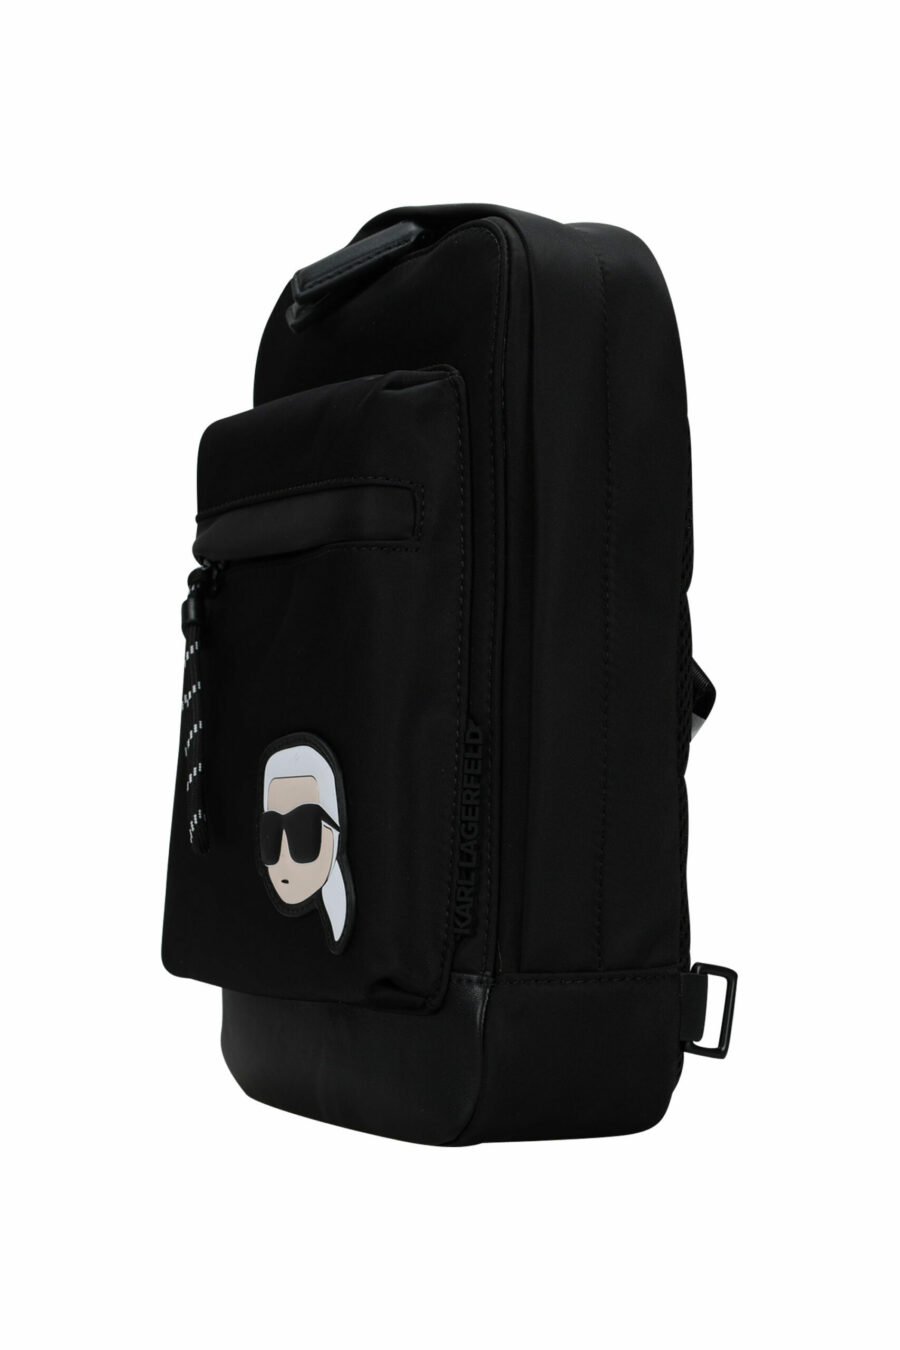 Black crossbody bag with mini-logo "kar" - 8720744411048 1 scaled